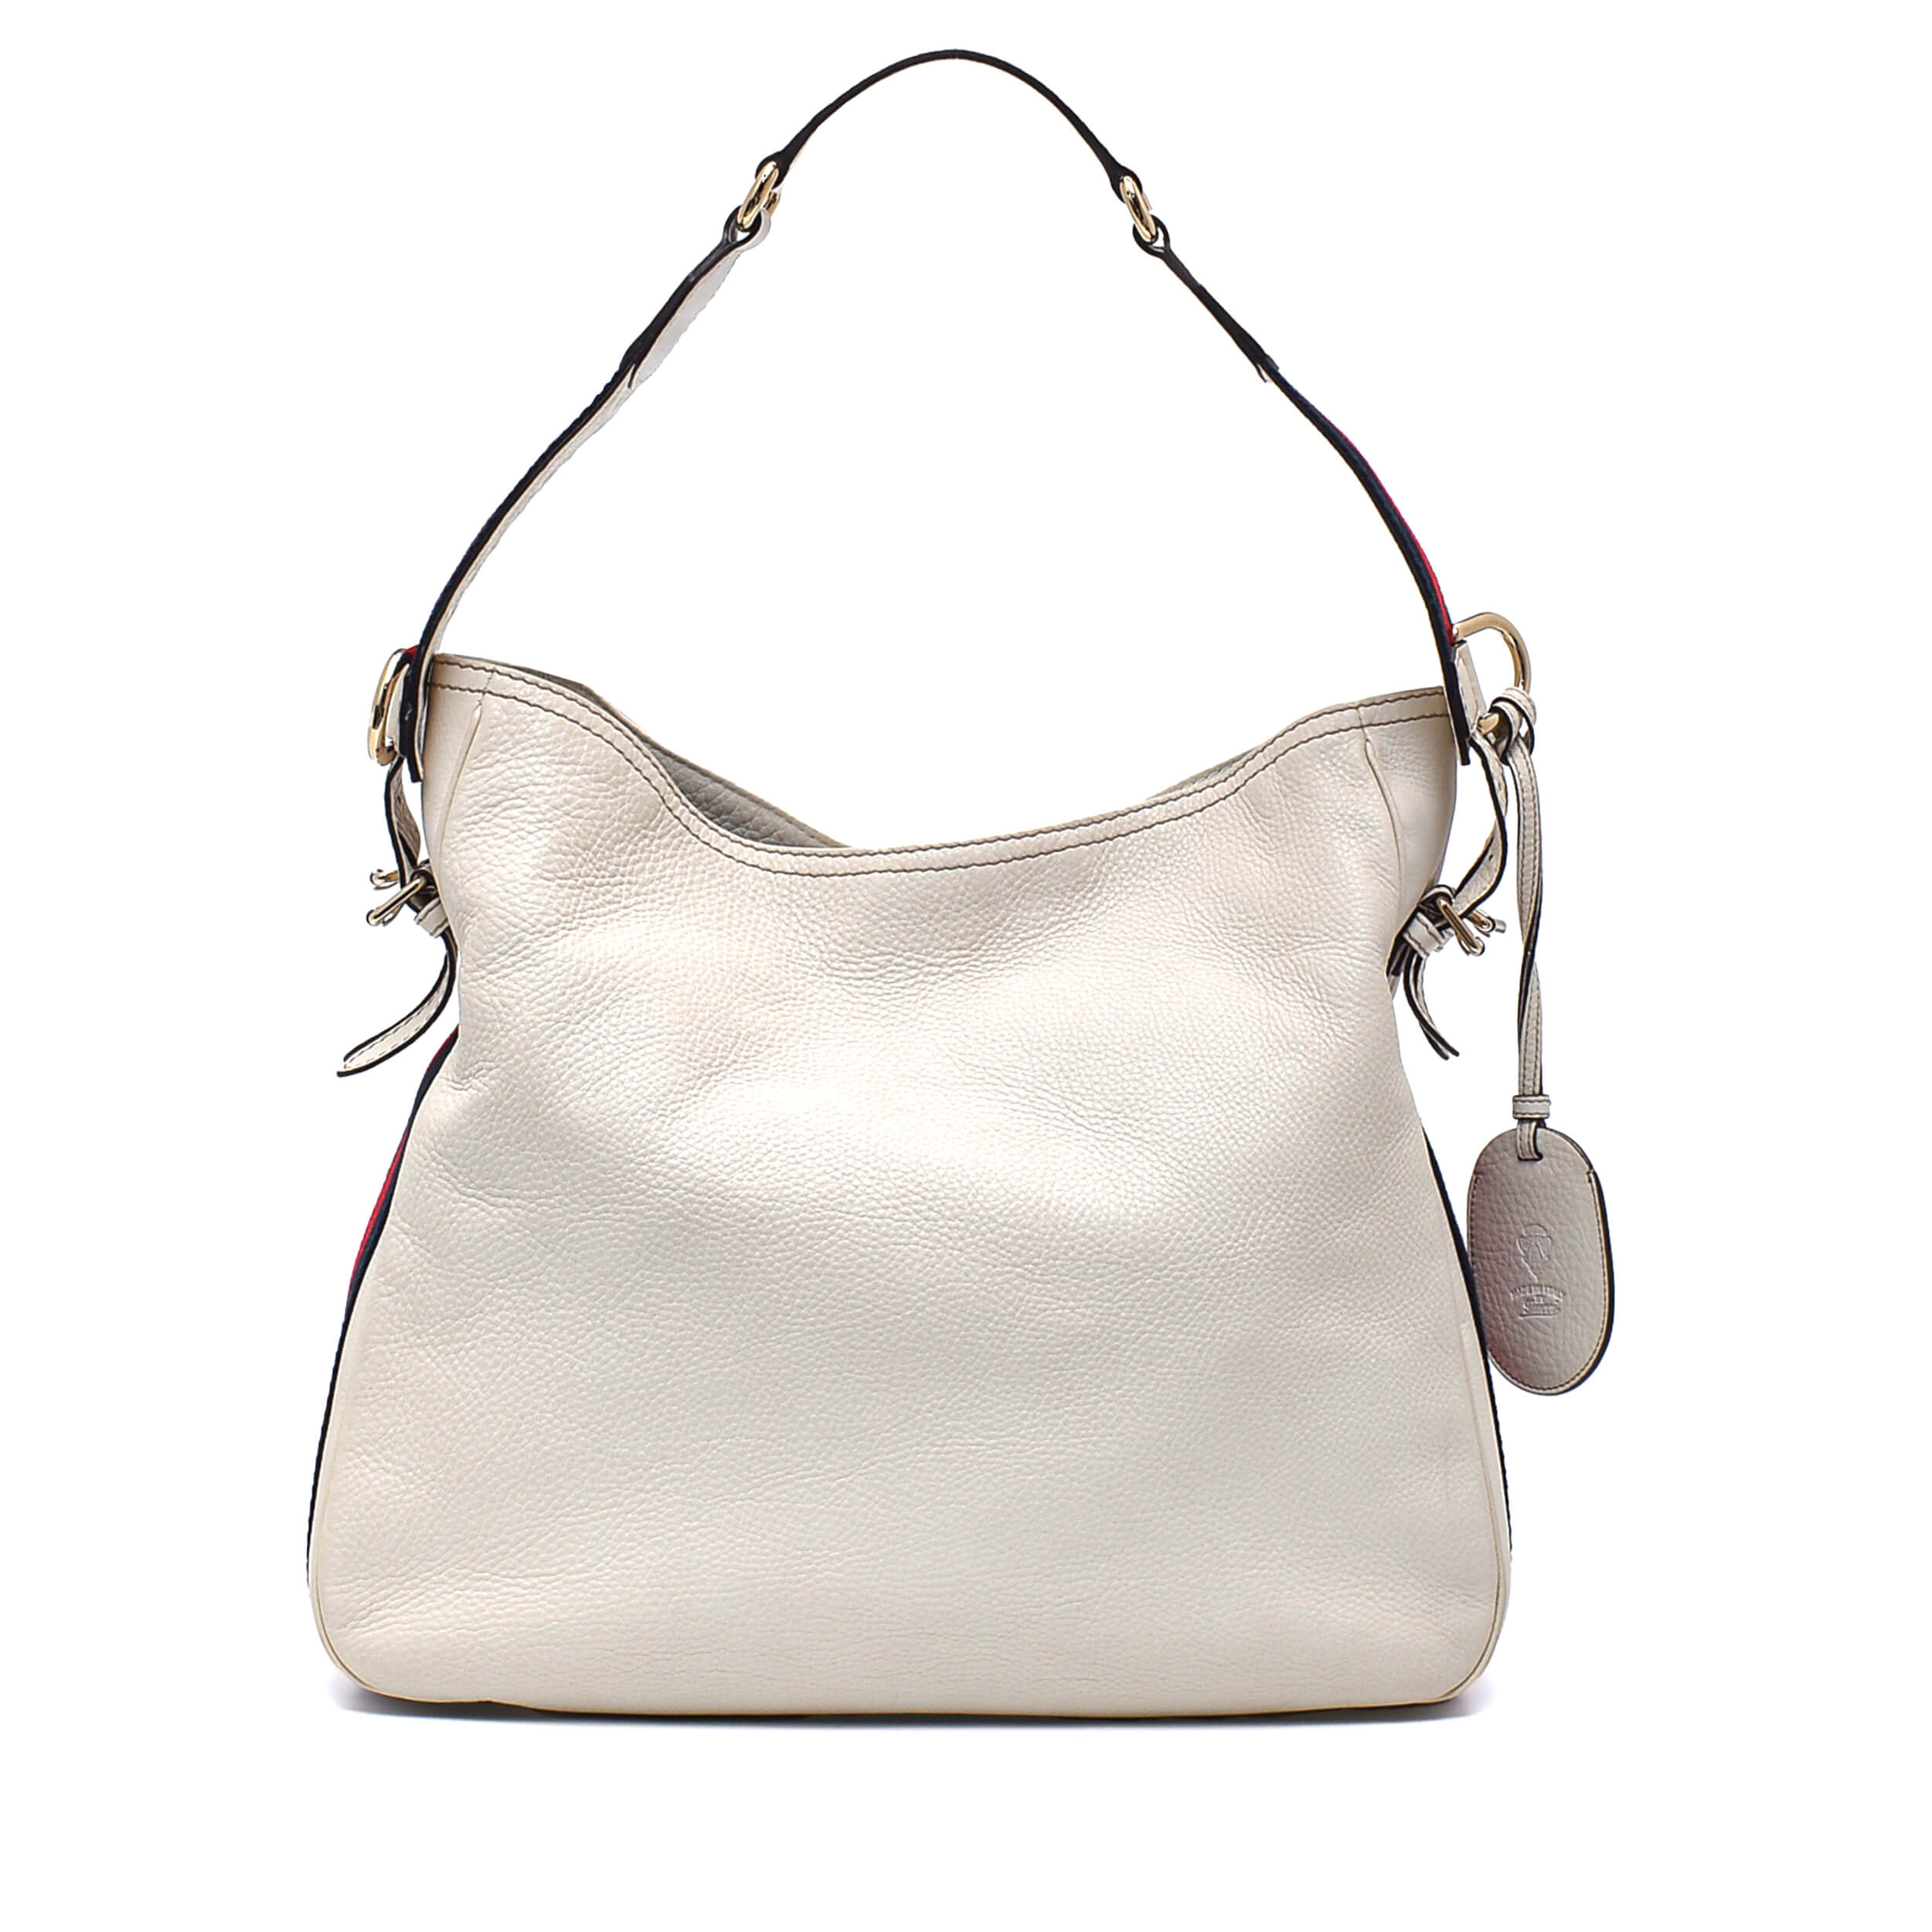 Gucci - White Leather GG Hobo Shoulder Bag